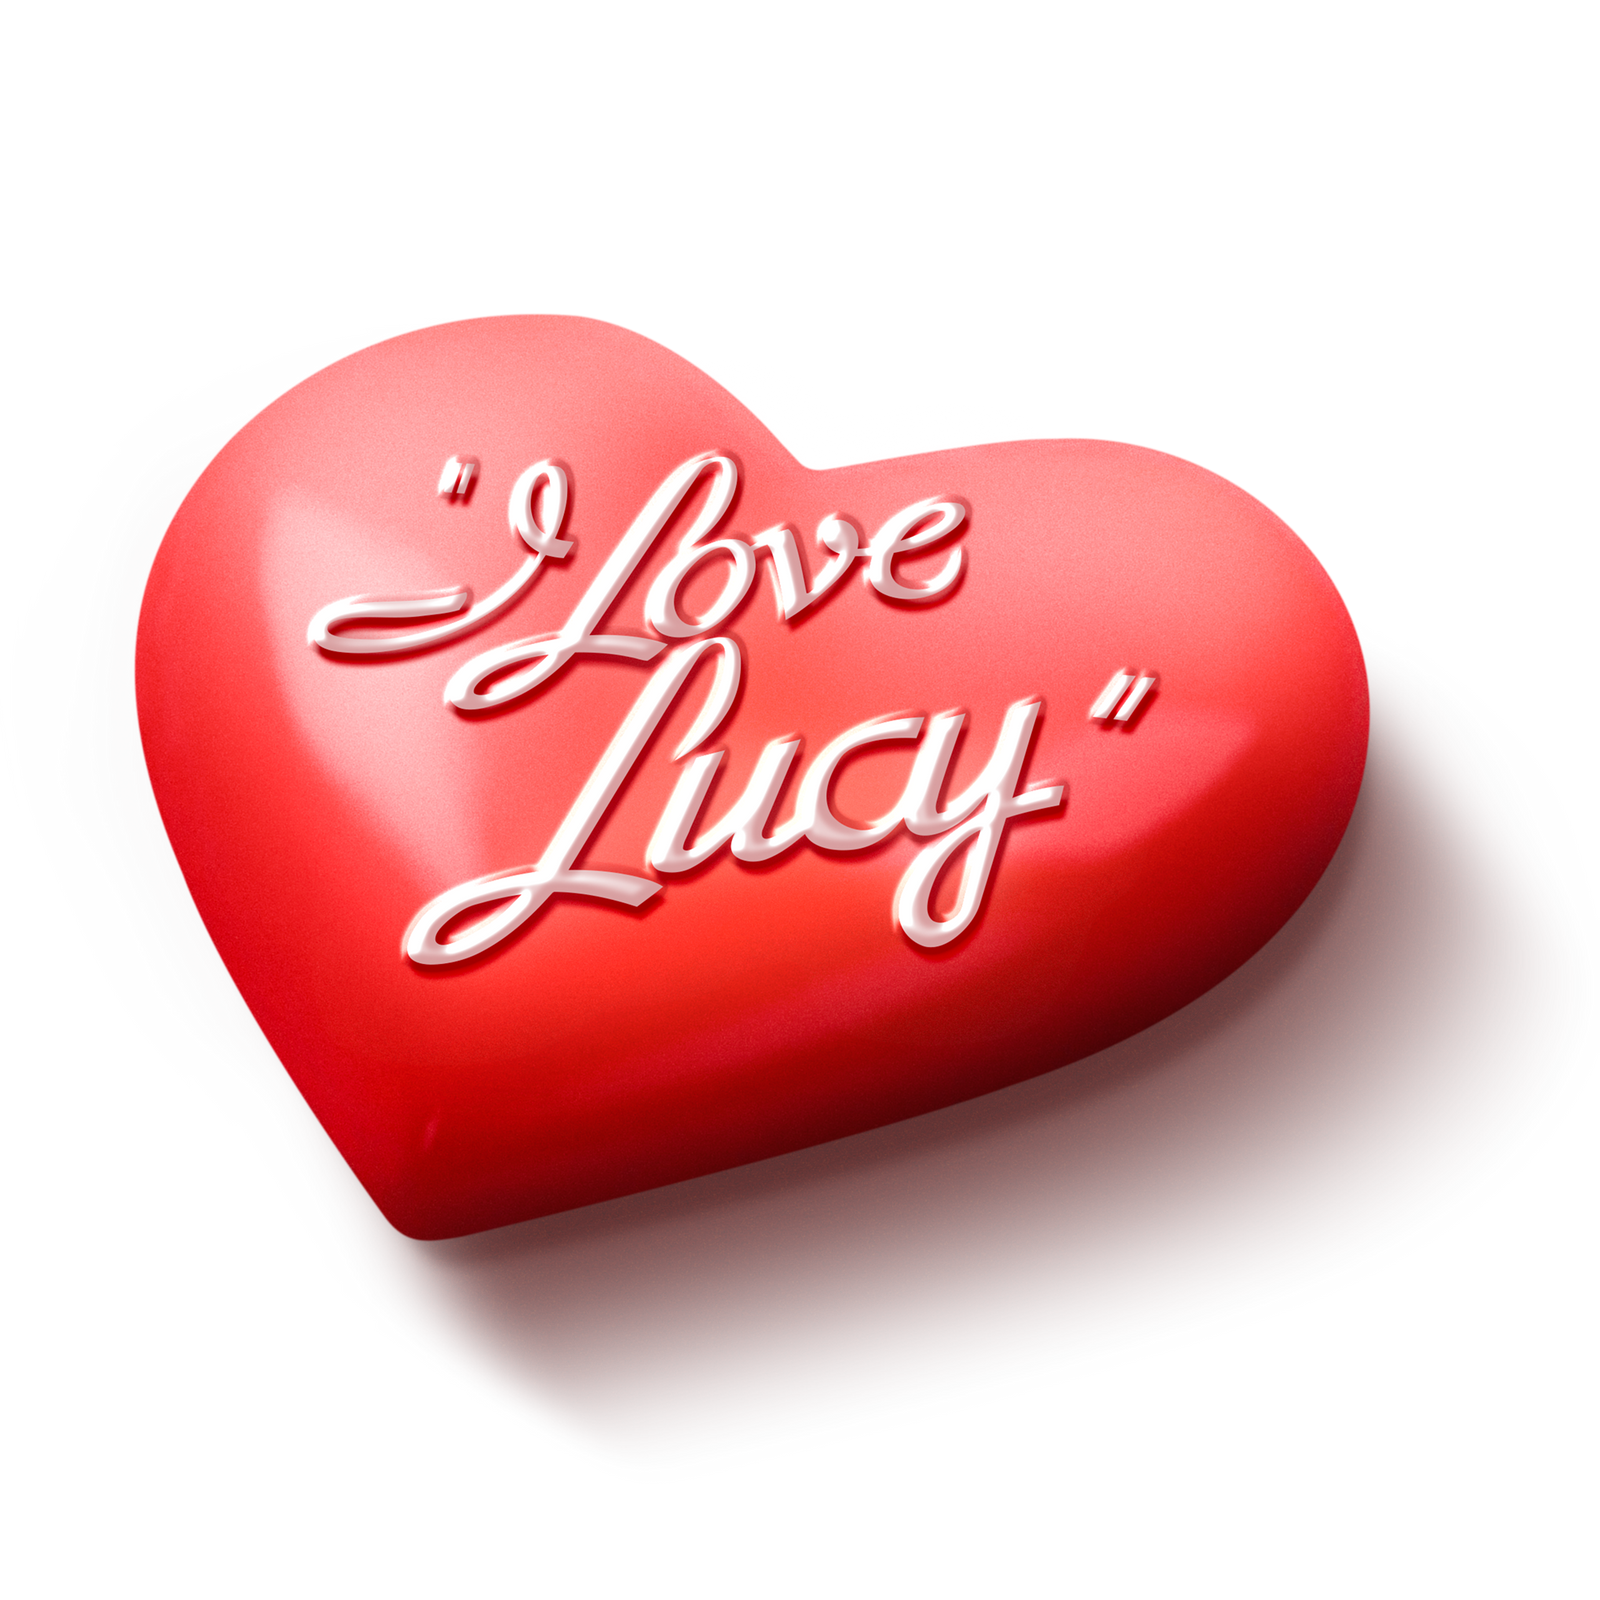 I Love Lucy logo.